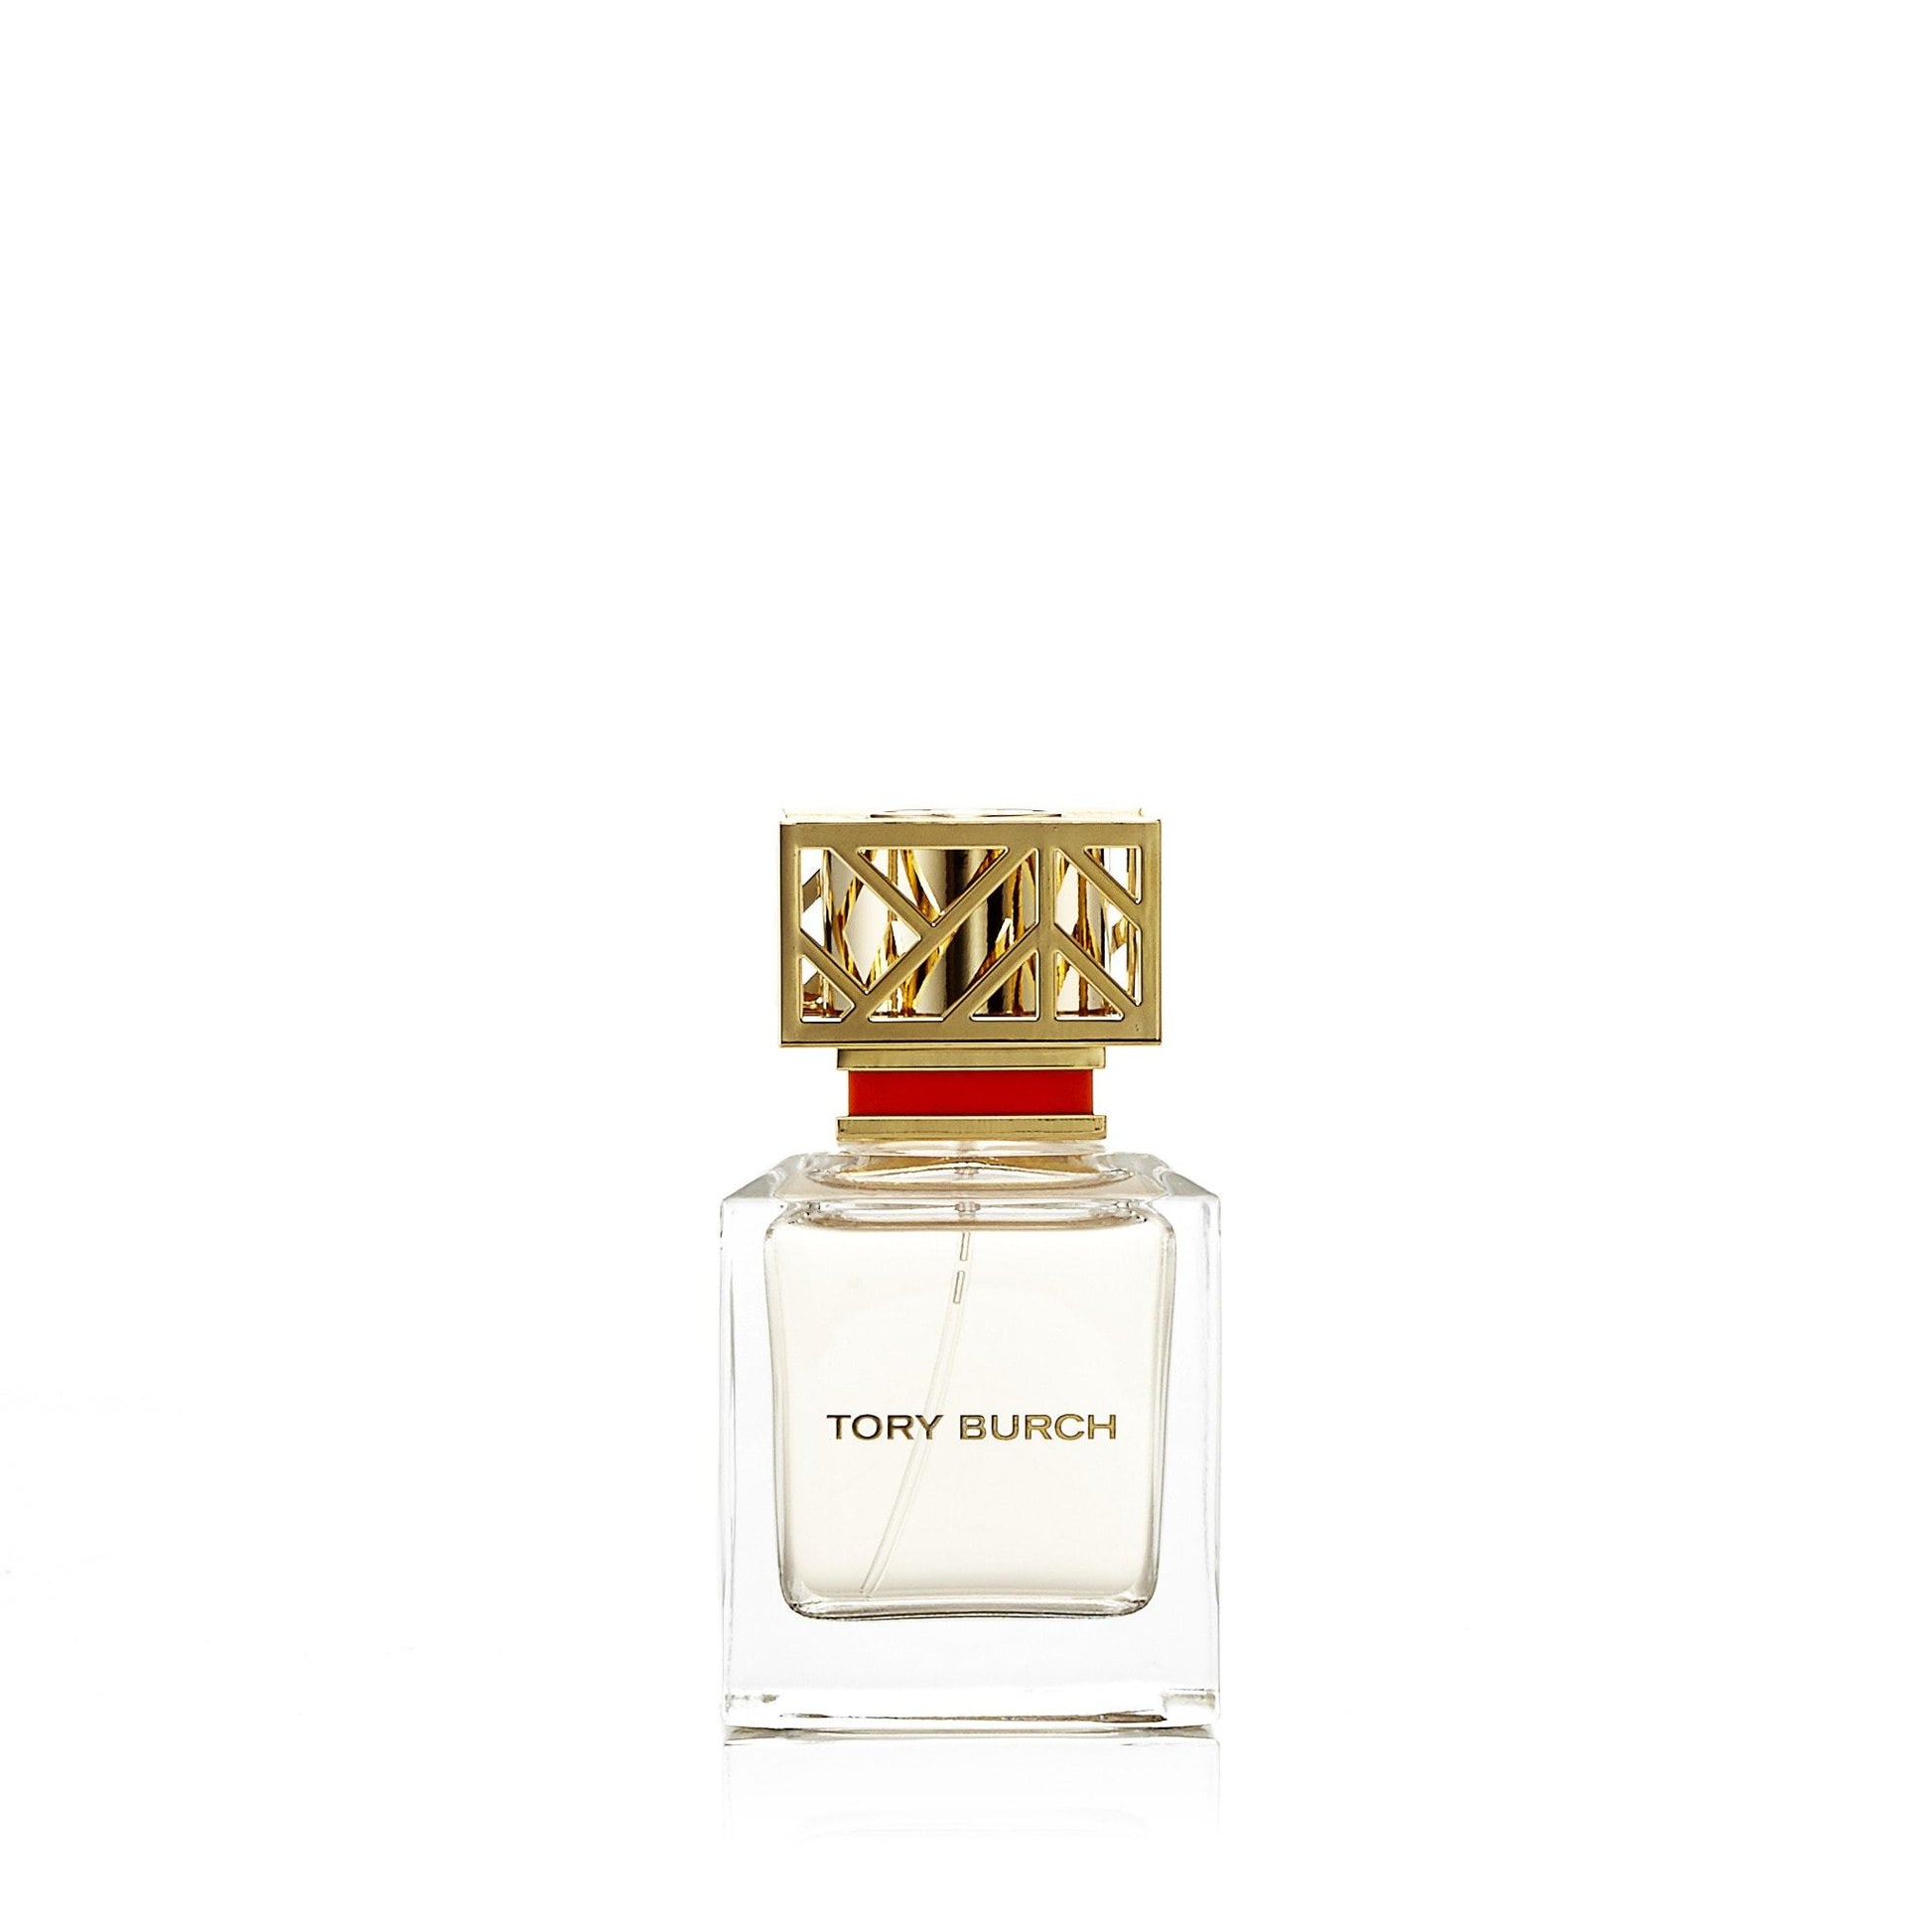 Tory Burch Eau de Parfum Spray for Women by Tory Burch, Product image 3